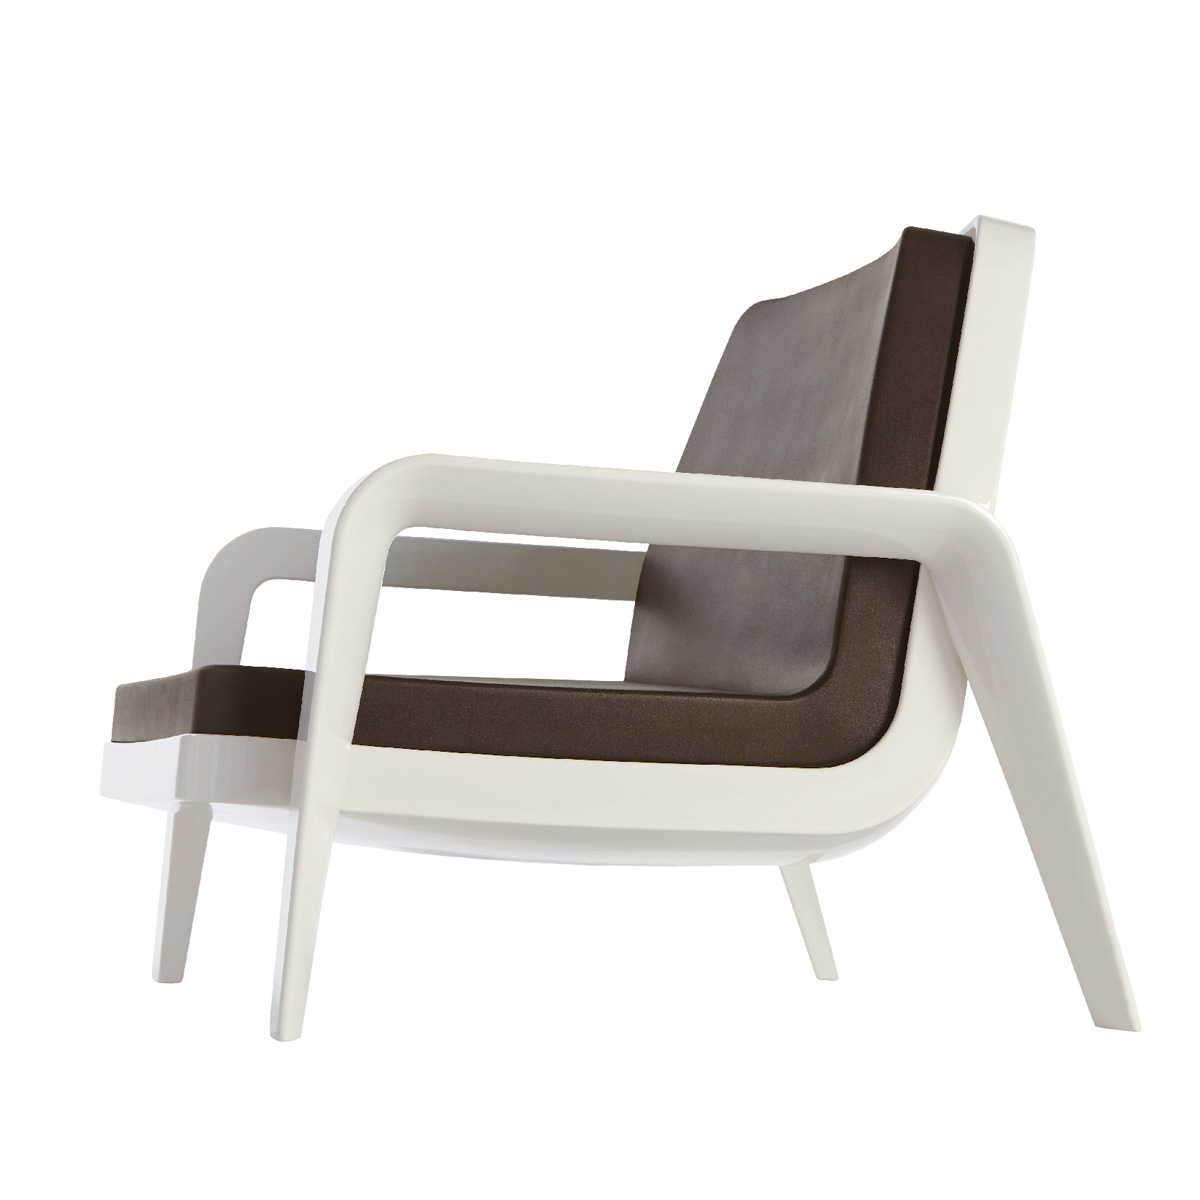 Slide America Plastic lounge chair OutdoorPatio